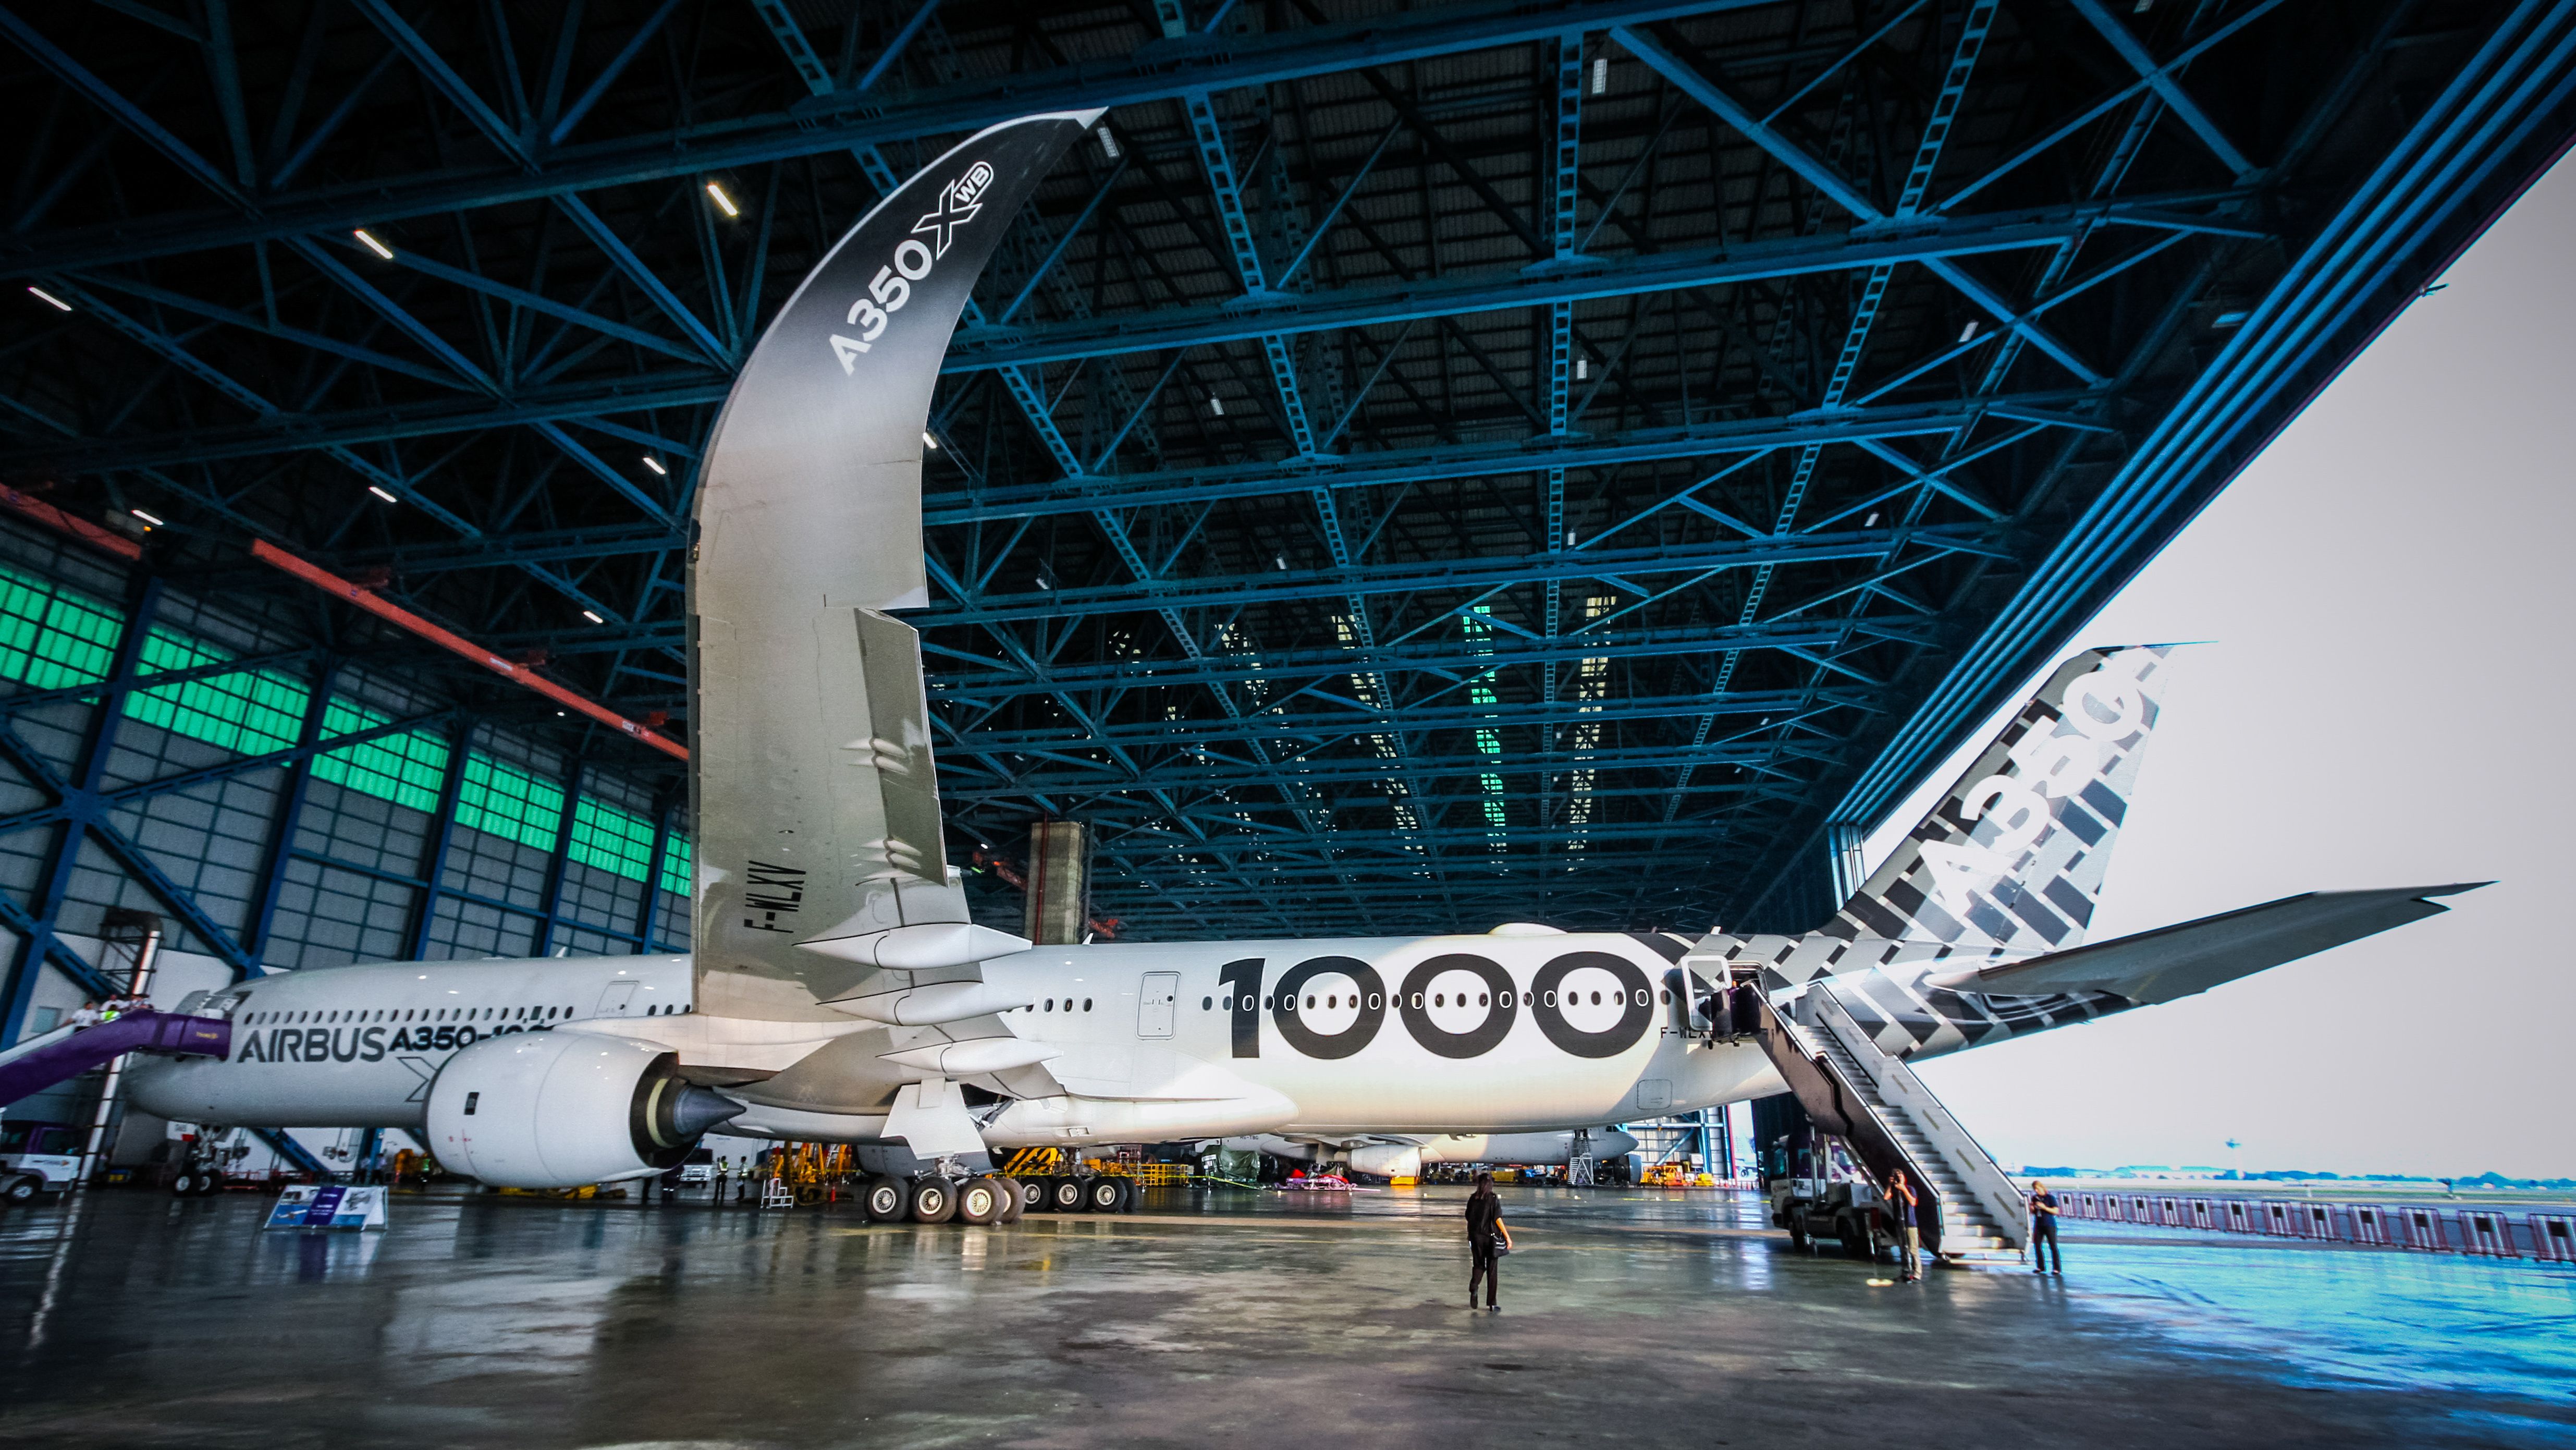 Airbus A350-1000 In Hangar